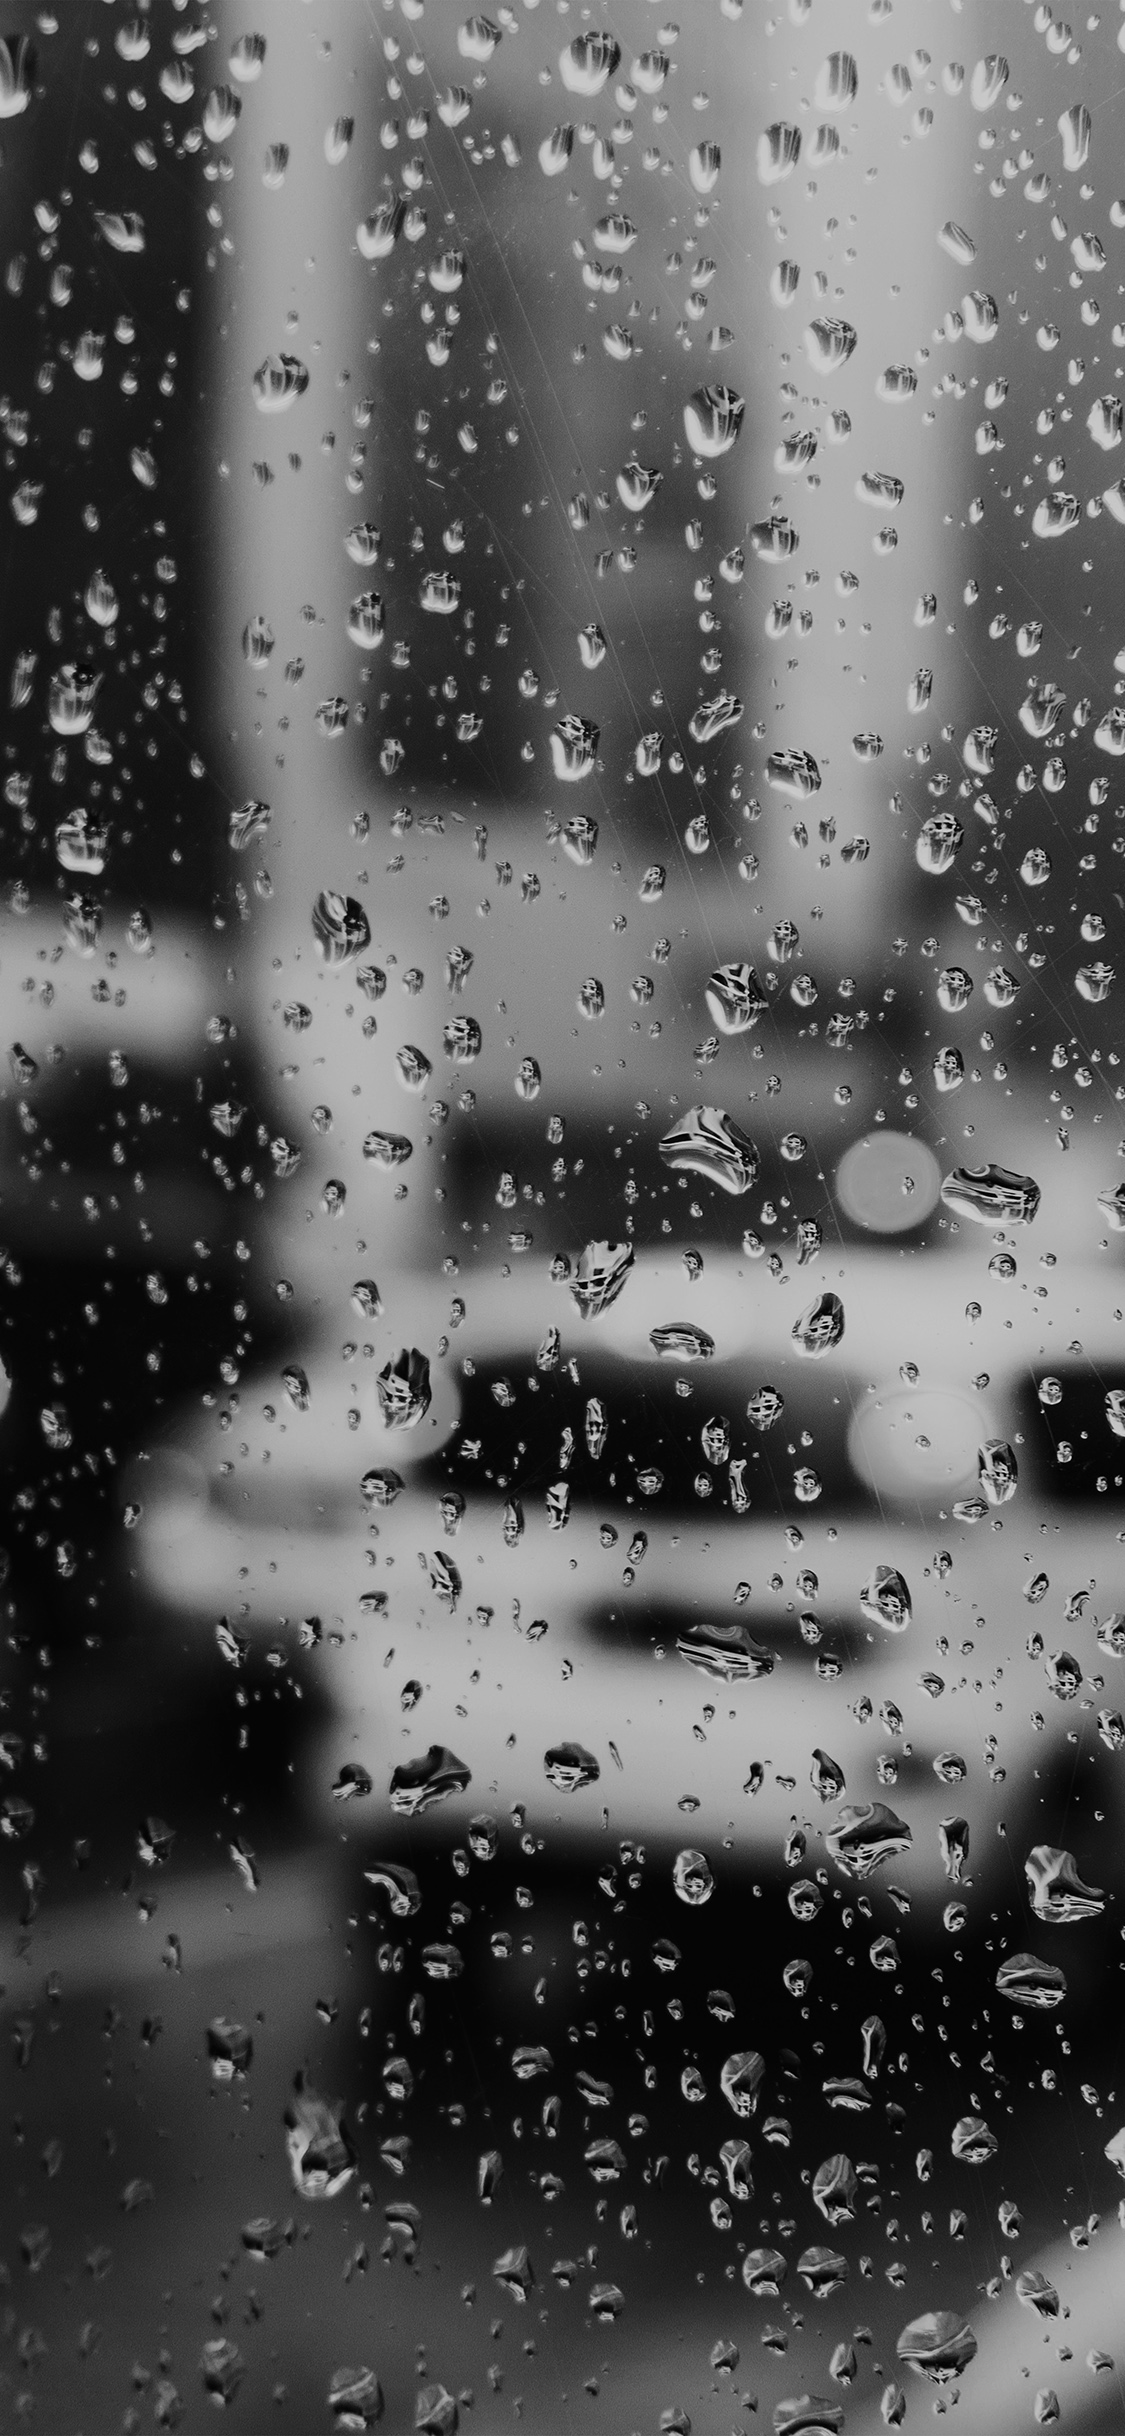 sad wallpaper,water,drop,black,rain,drizzle